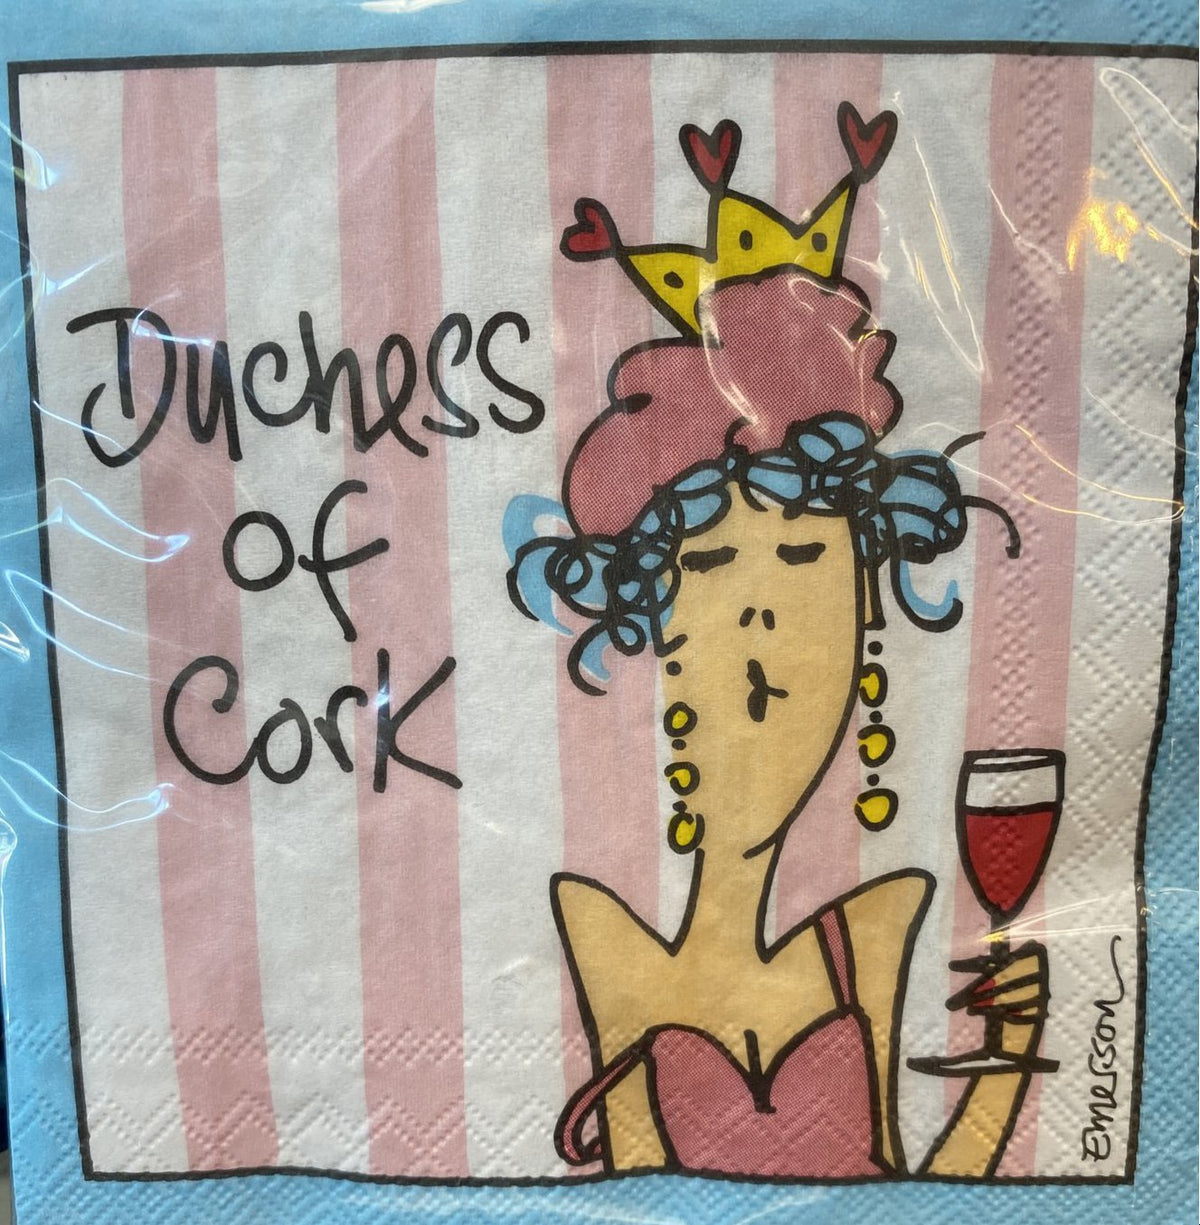 Dutchess of Cork